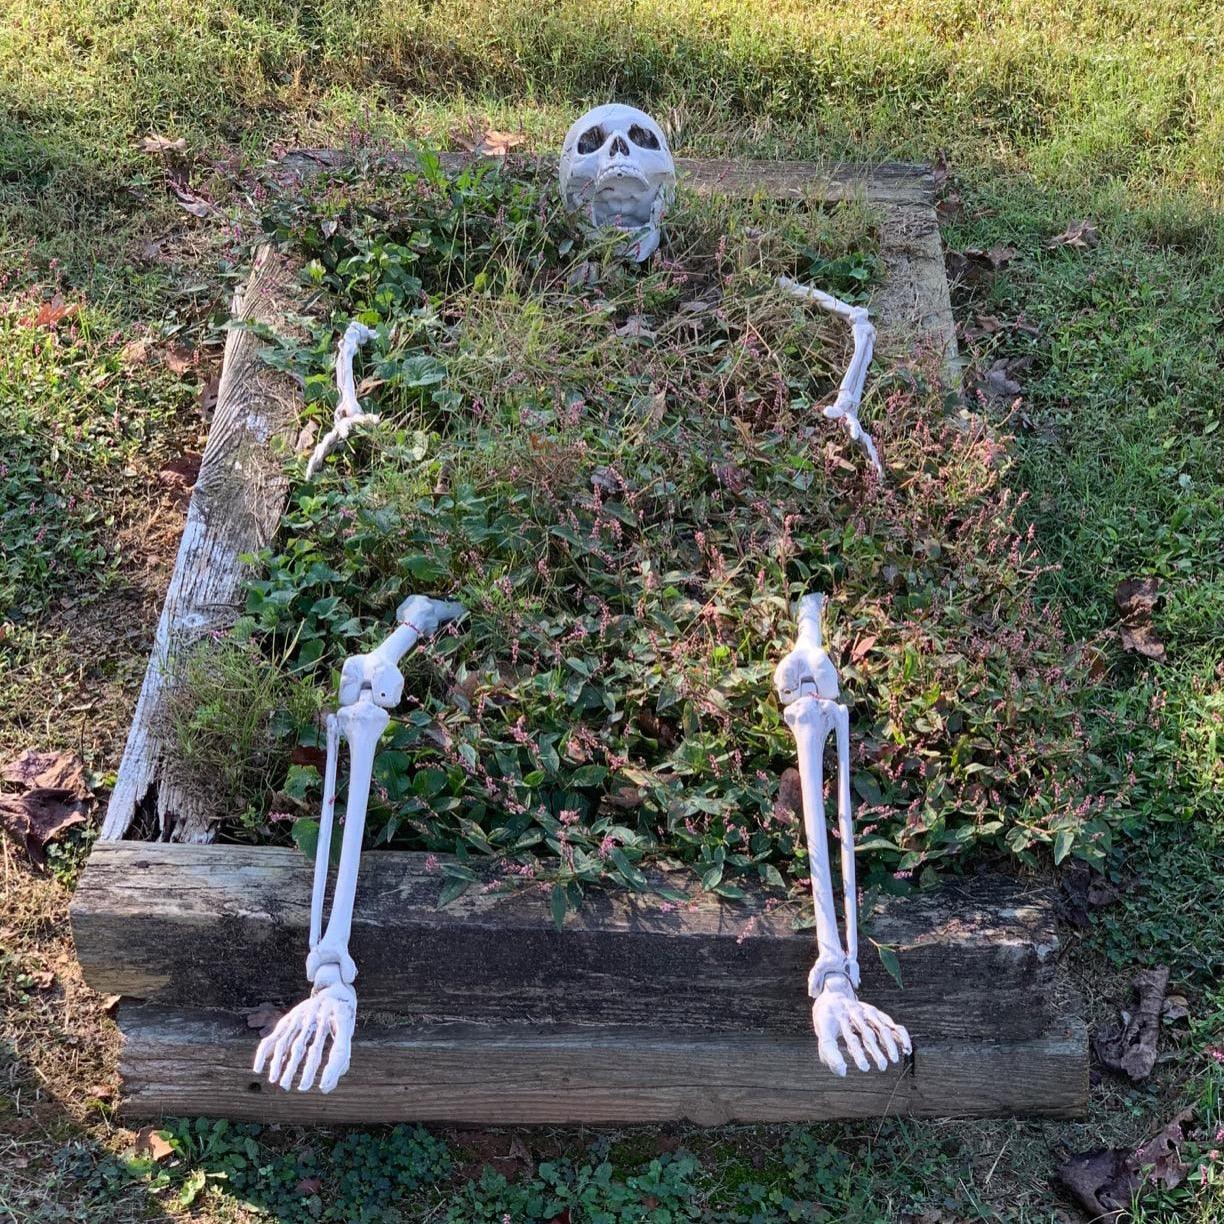 Realistic Skeleton Stakes Halloween Decorations Scary Skull Skeleton Hand Bone For Yard Lawn Stake Garden Graveyard